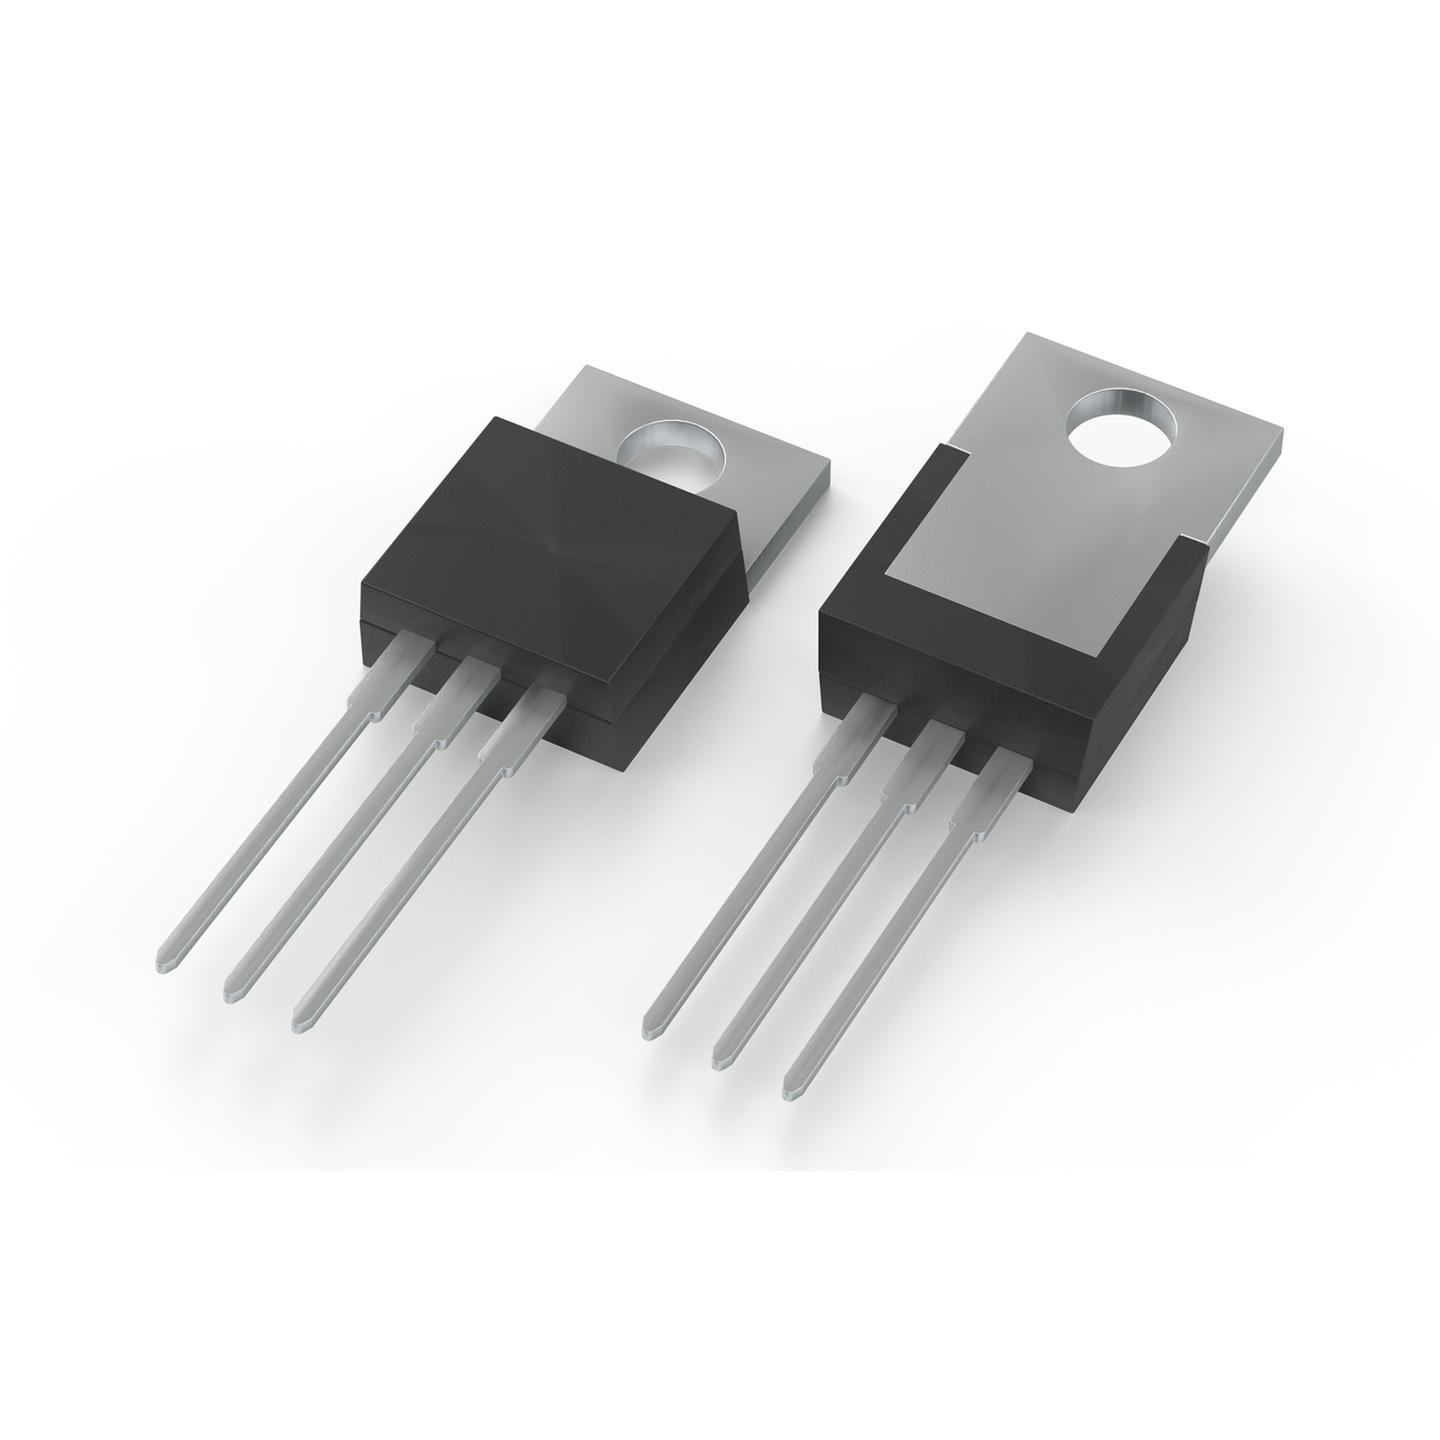 TIP42C PNP Transistor